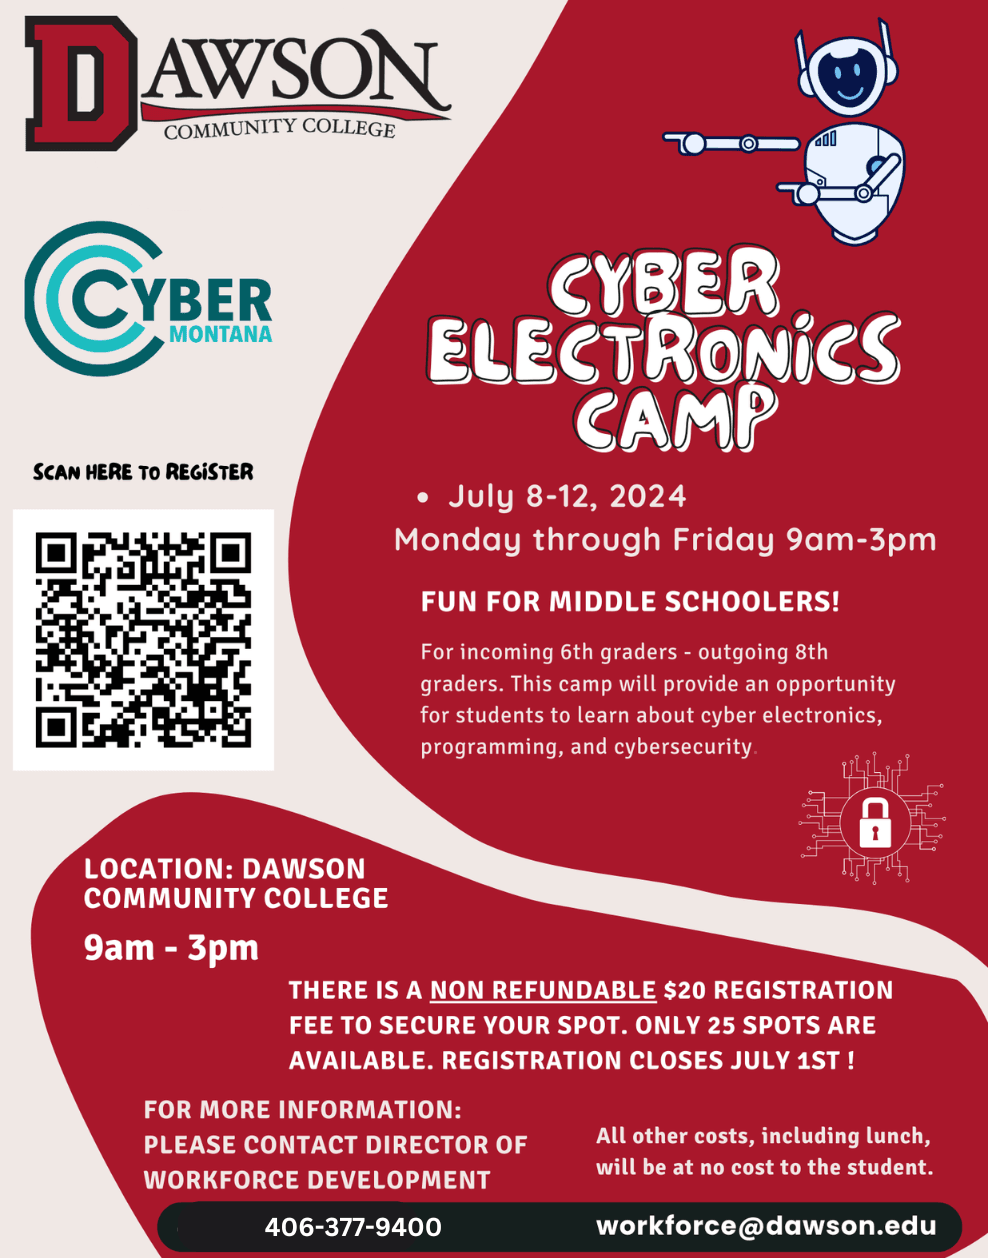 Cyber Electronics Camp July 8-12